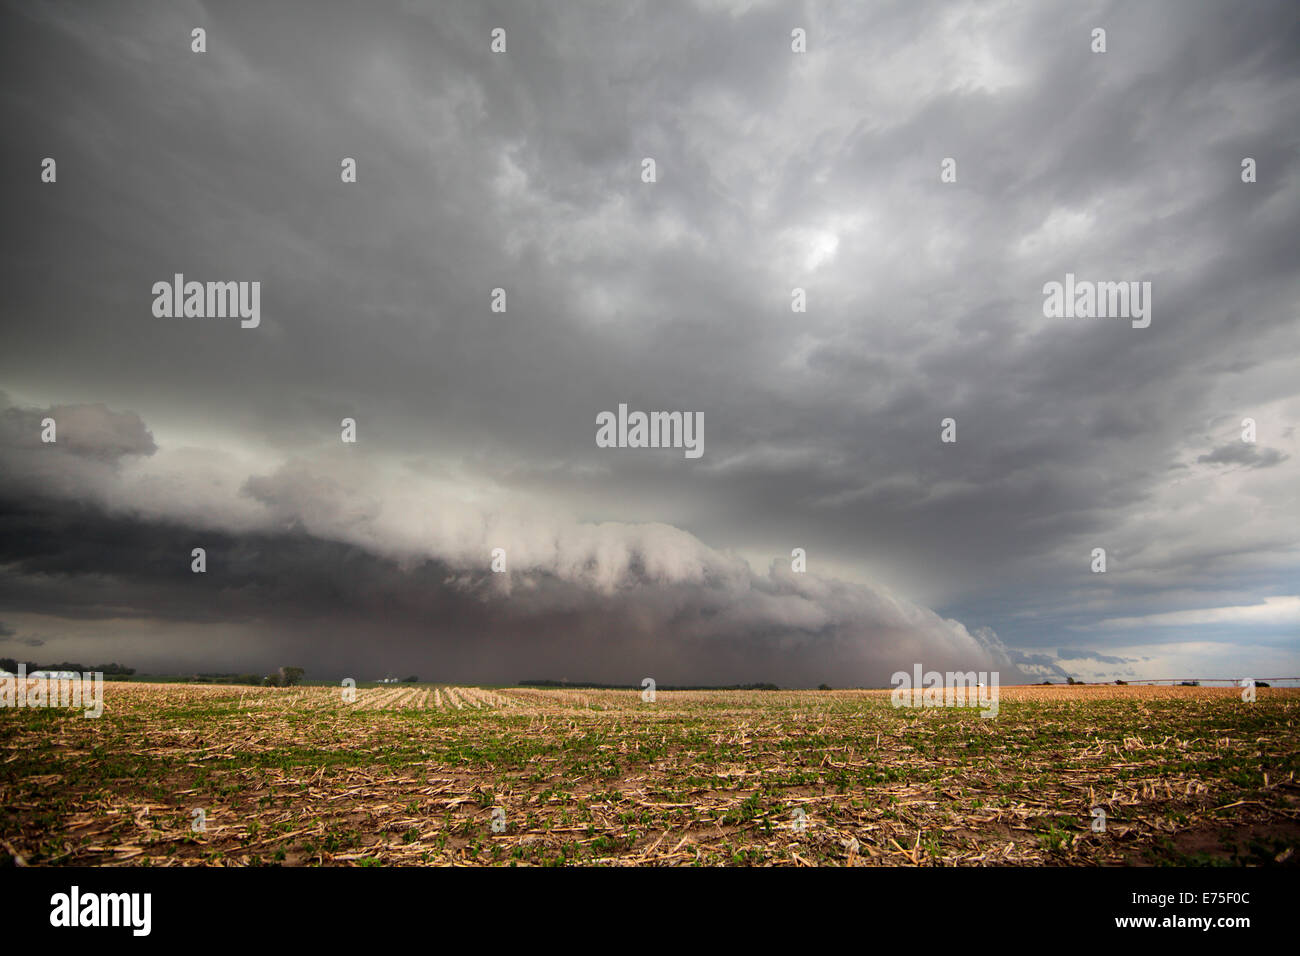 A shelf cloud above a farm field. Stock Photo